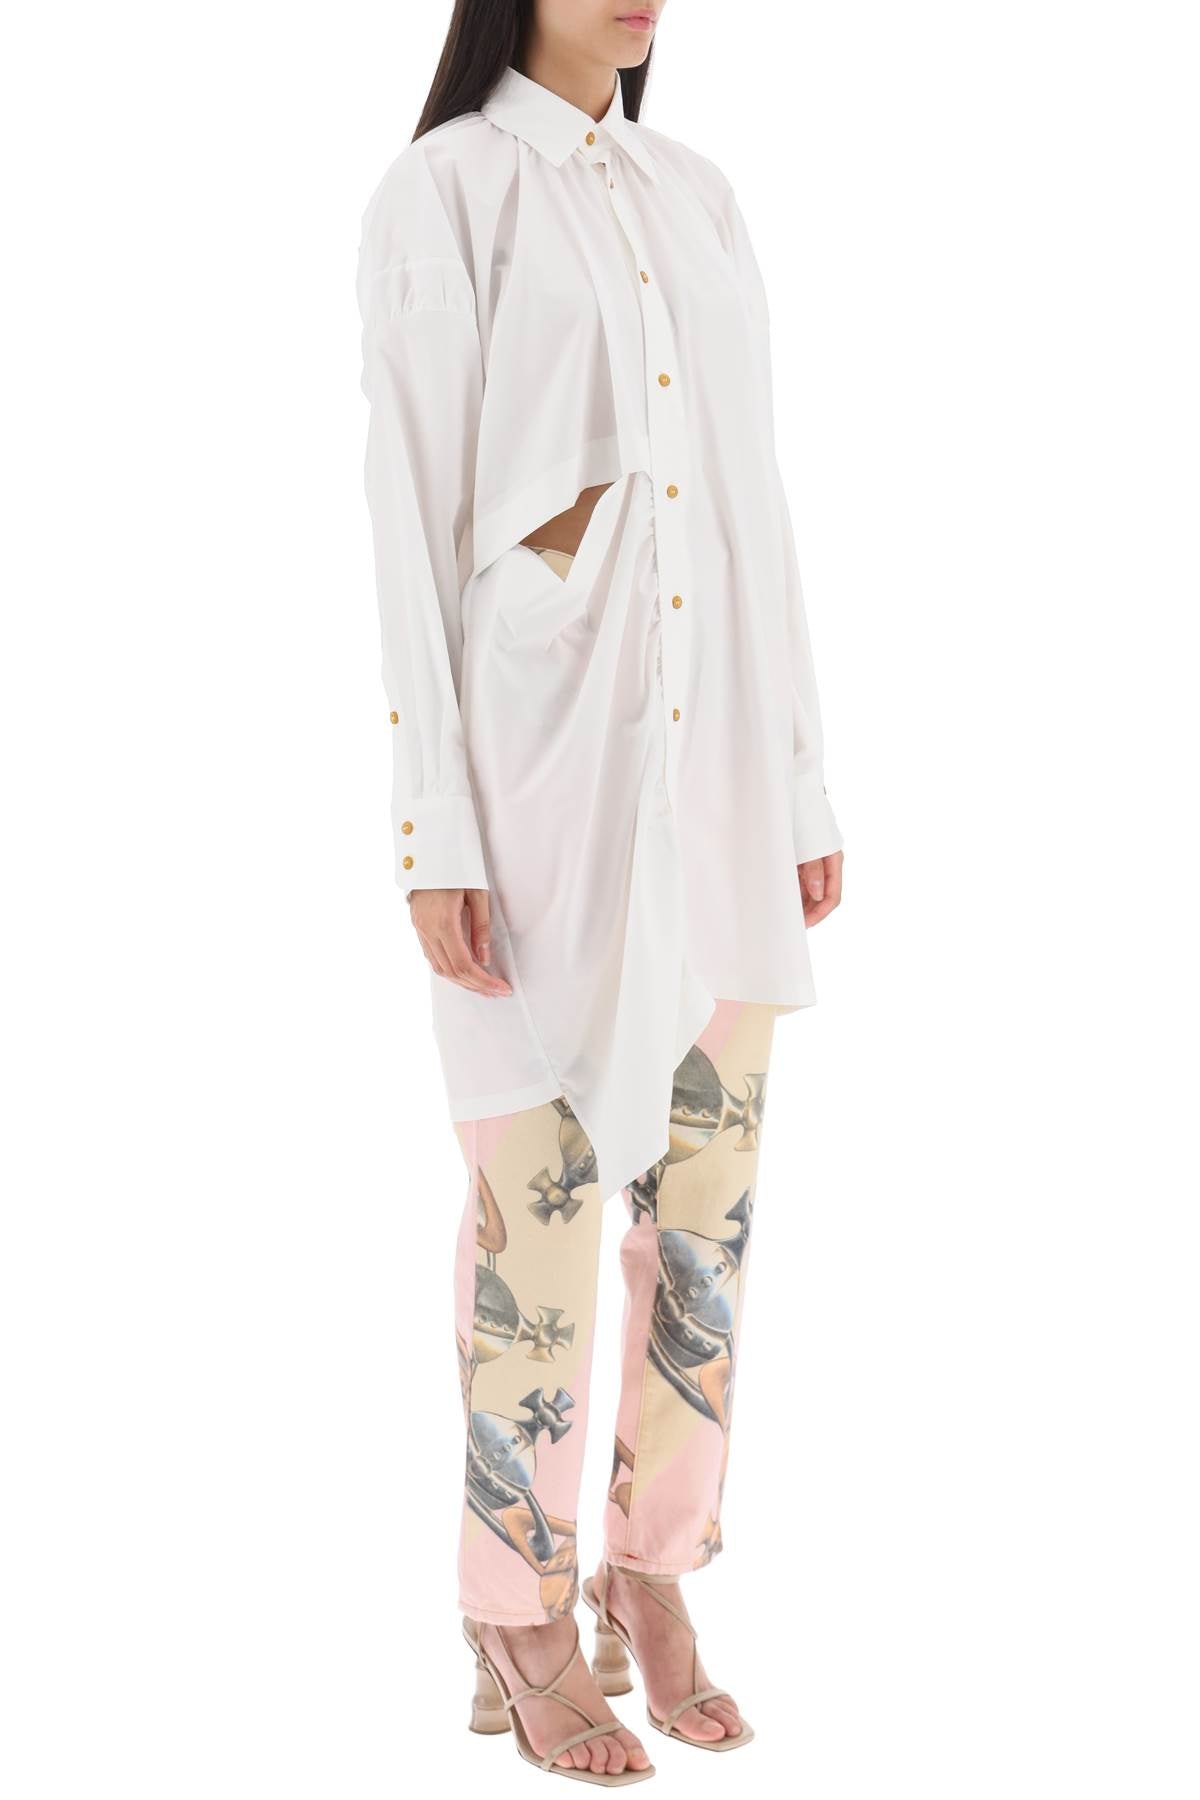 Vivienne westwood gibbon asymmetric shirt dress with cut-outs-1